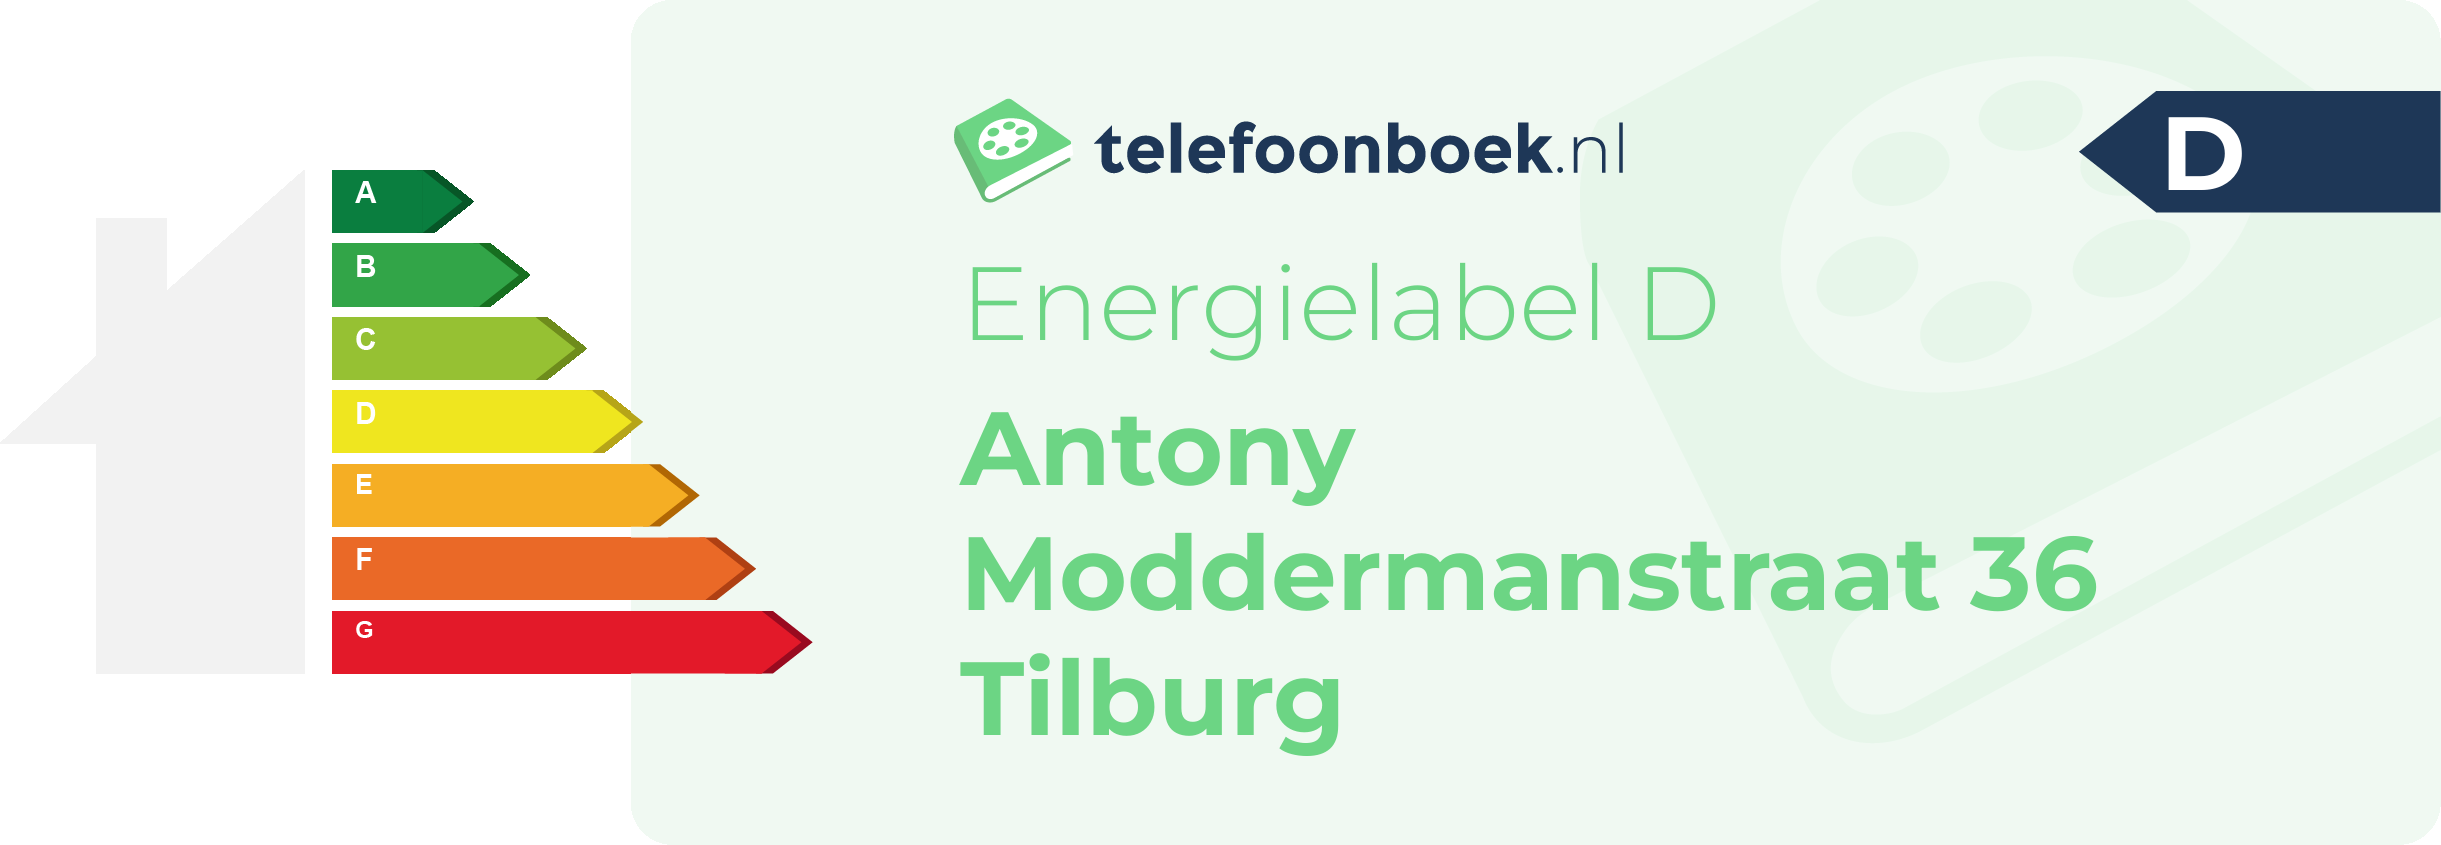 Energielabel Antony Moddermanstraat 36 Tilburg